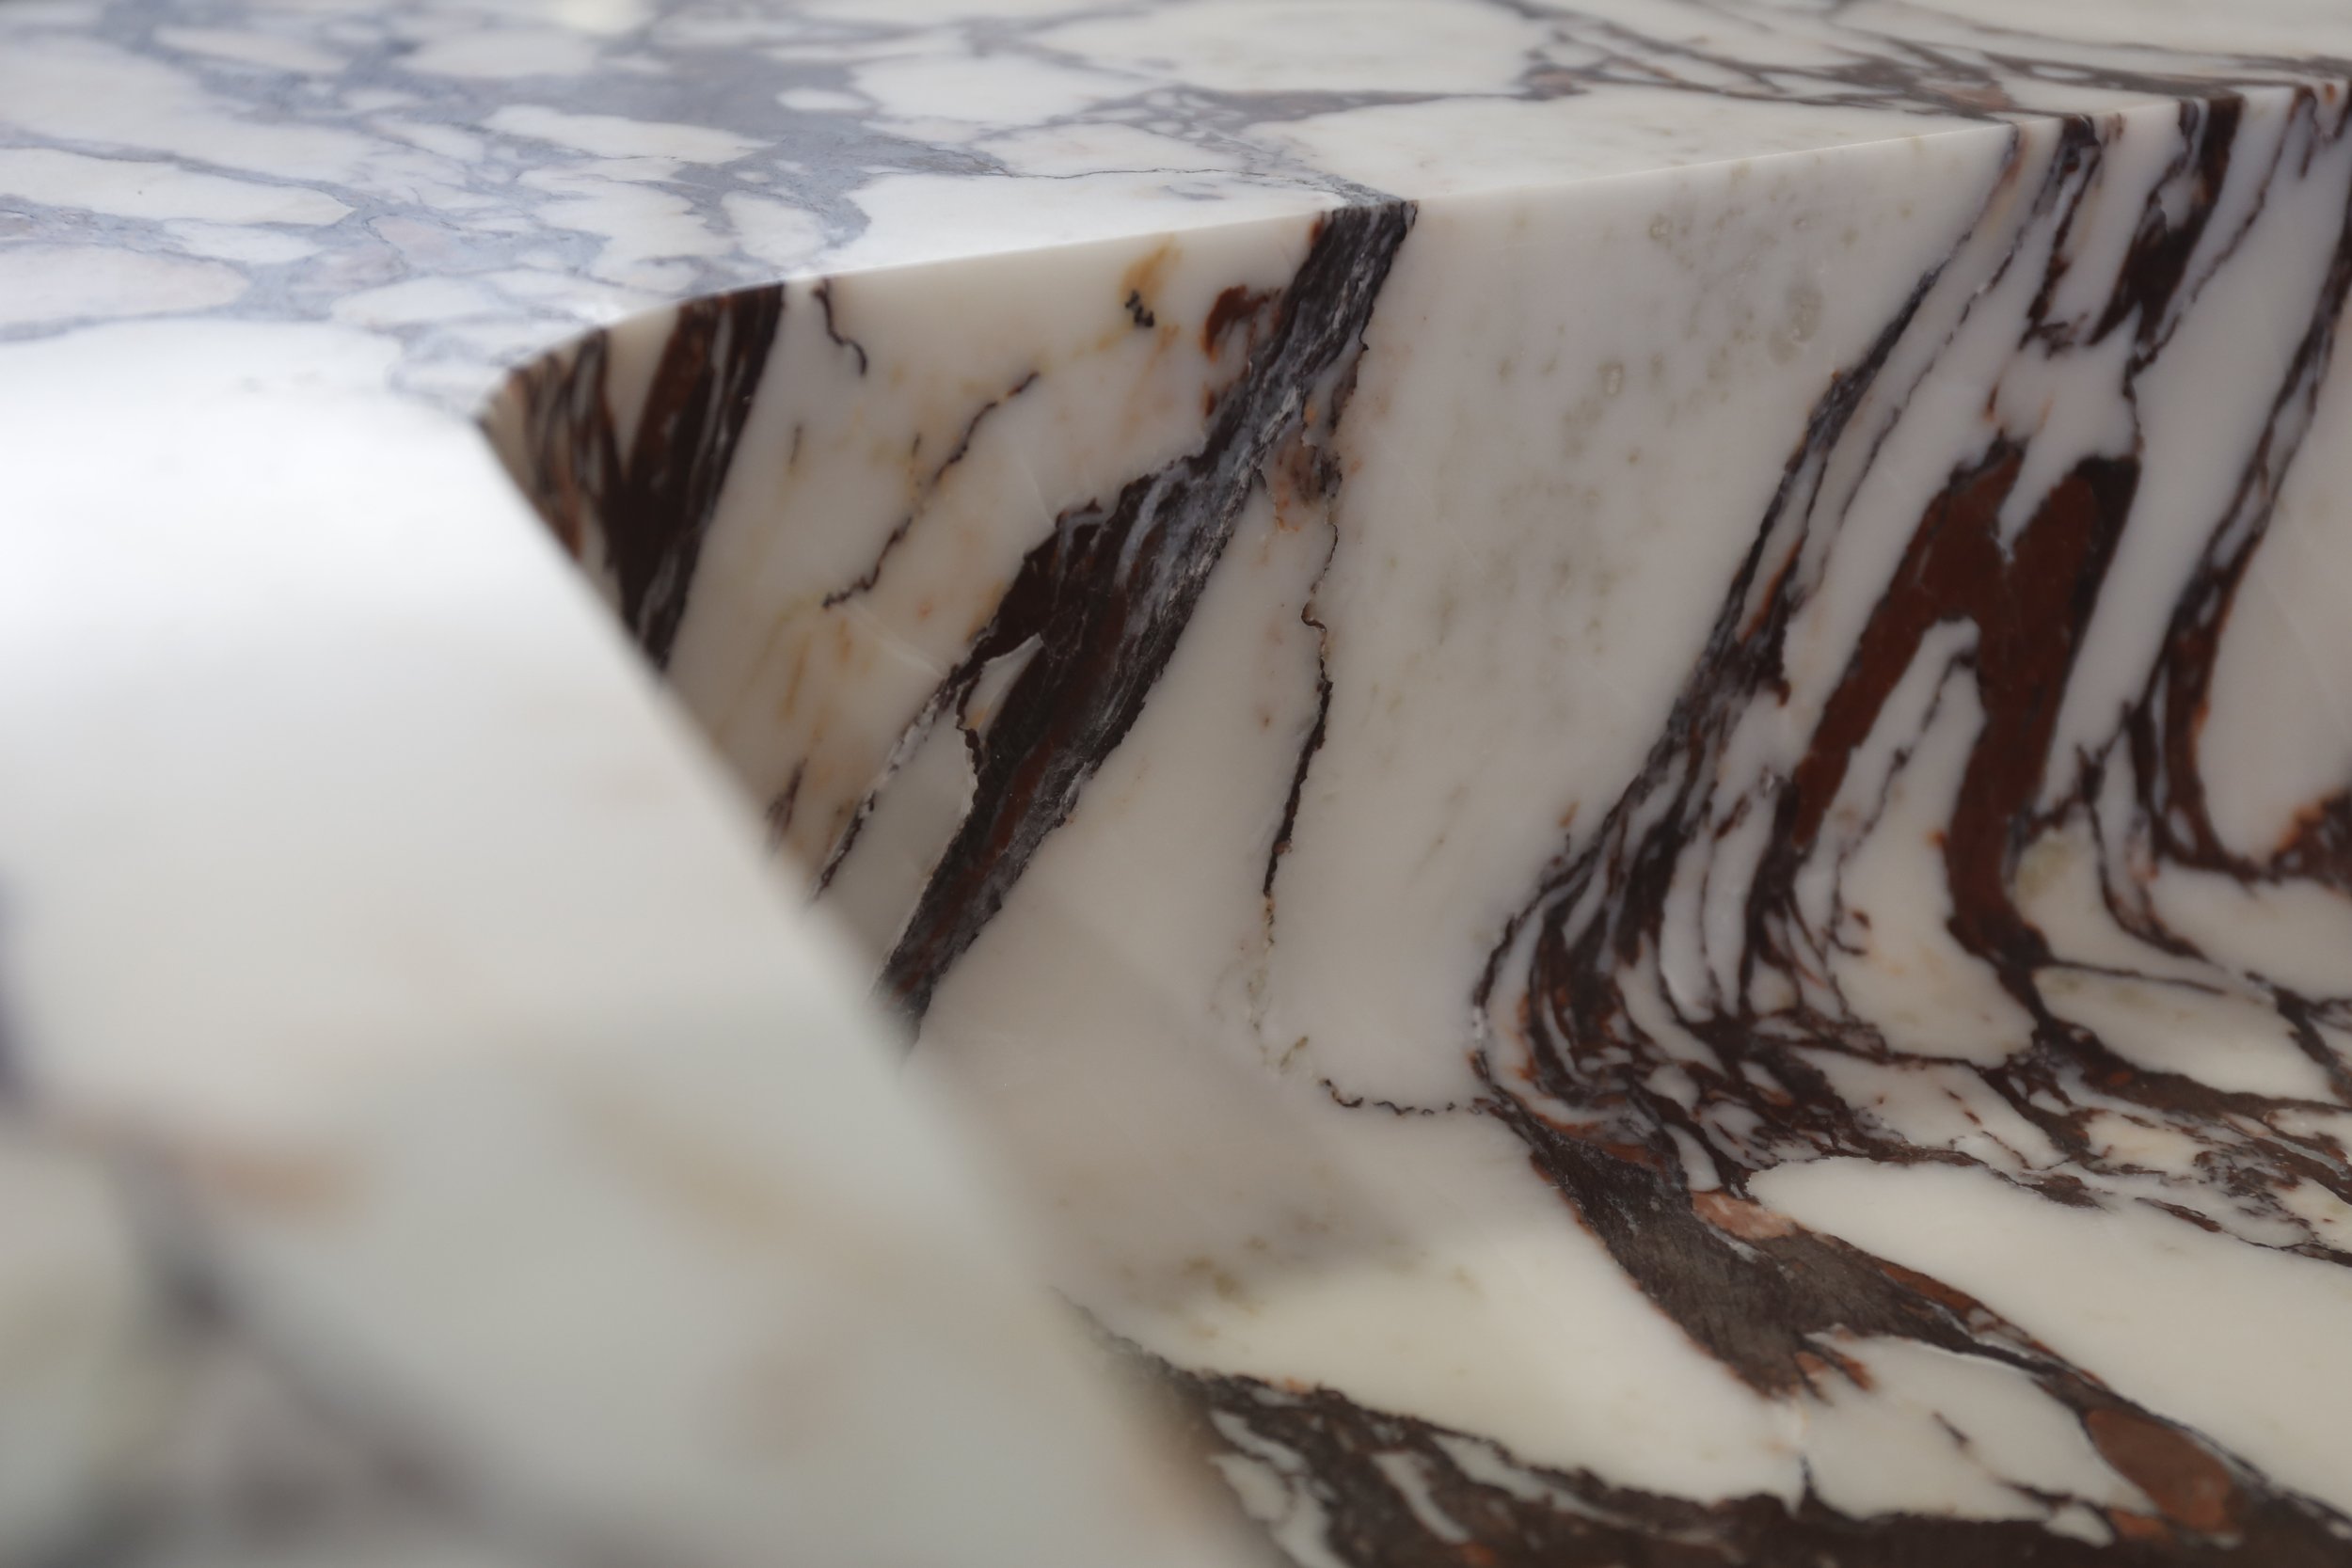 custom arabescato marble vanities for willo perron's LA ROC NATION project